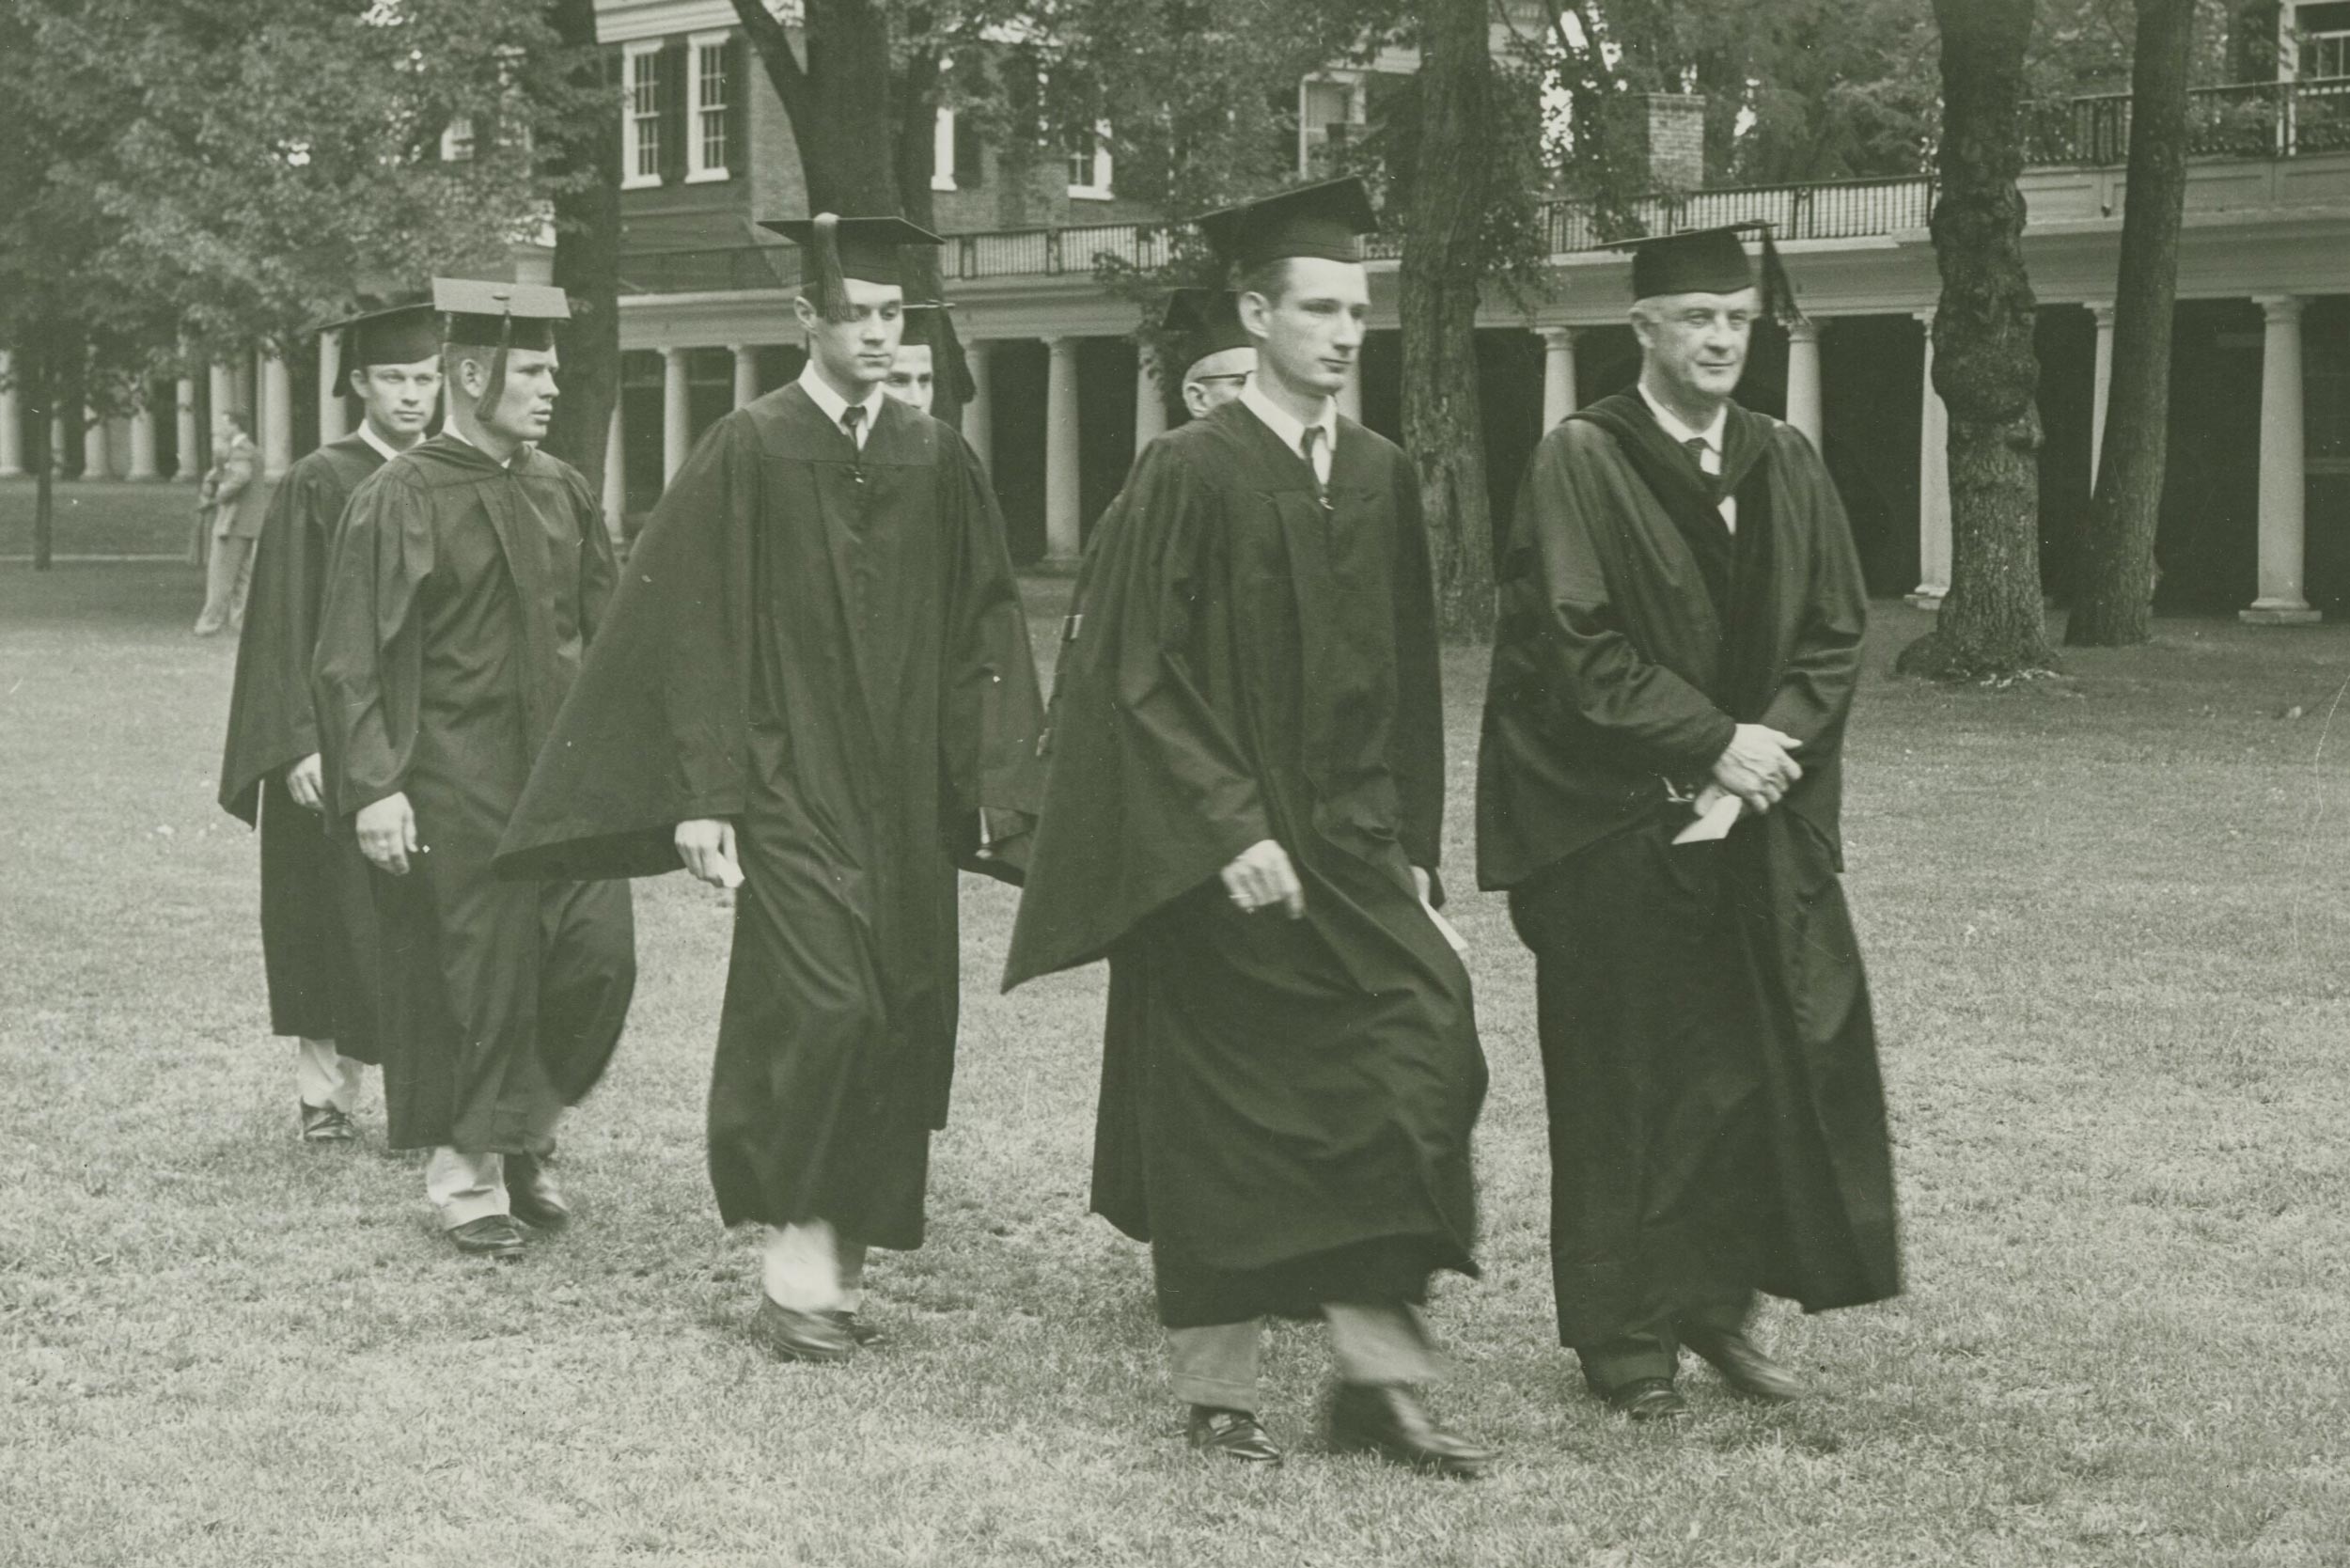 Darden Class of 1954 walking the Lawn to graduation